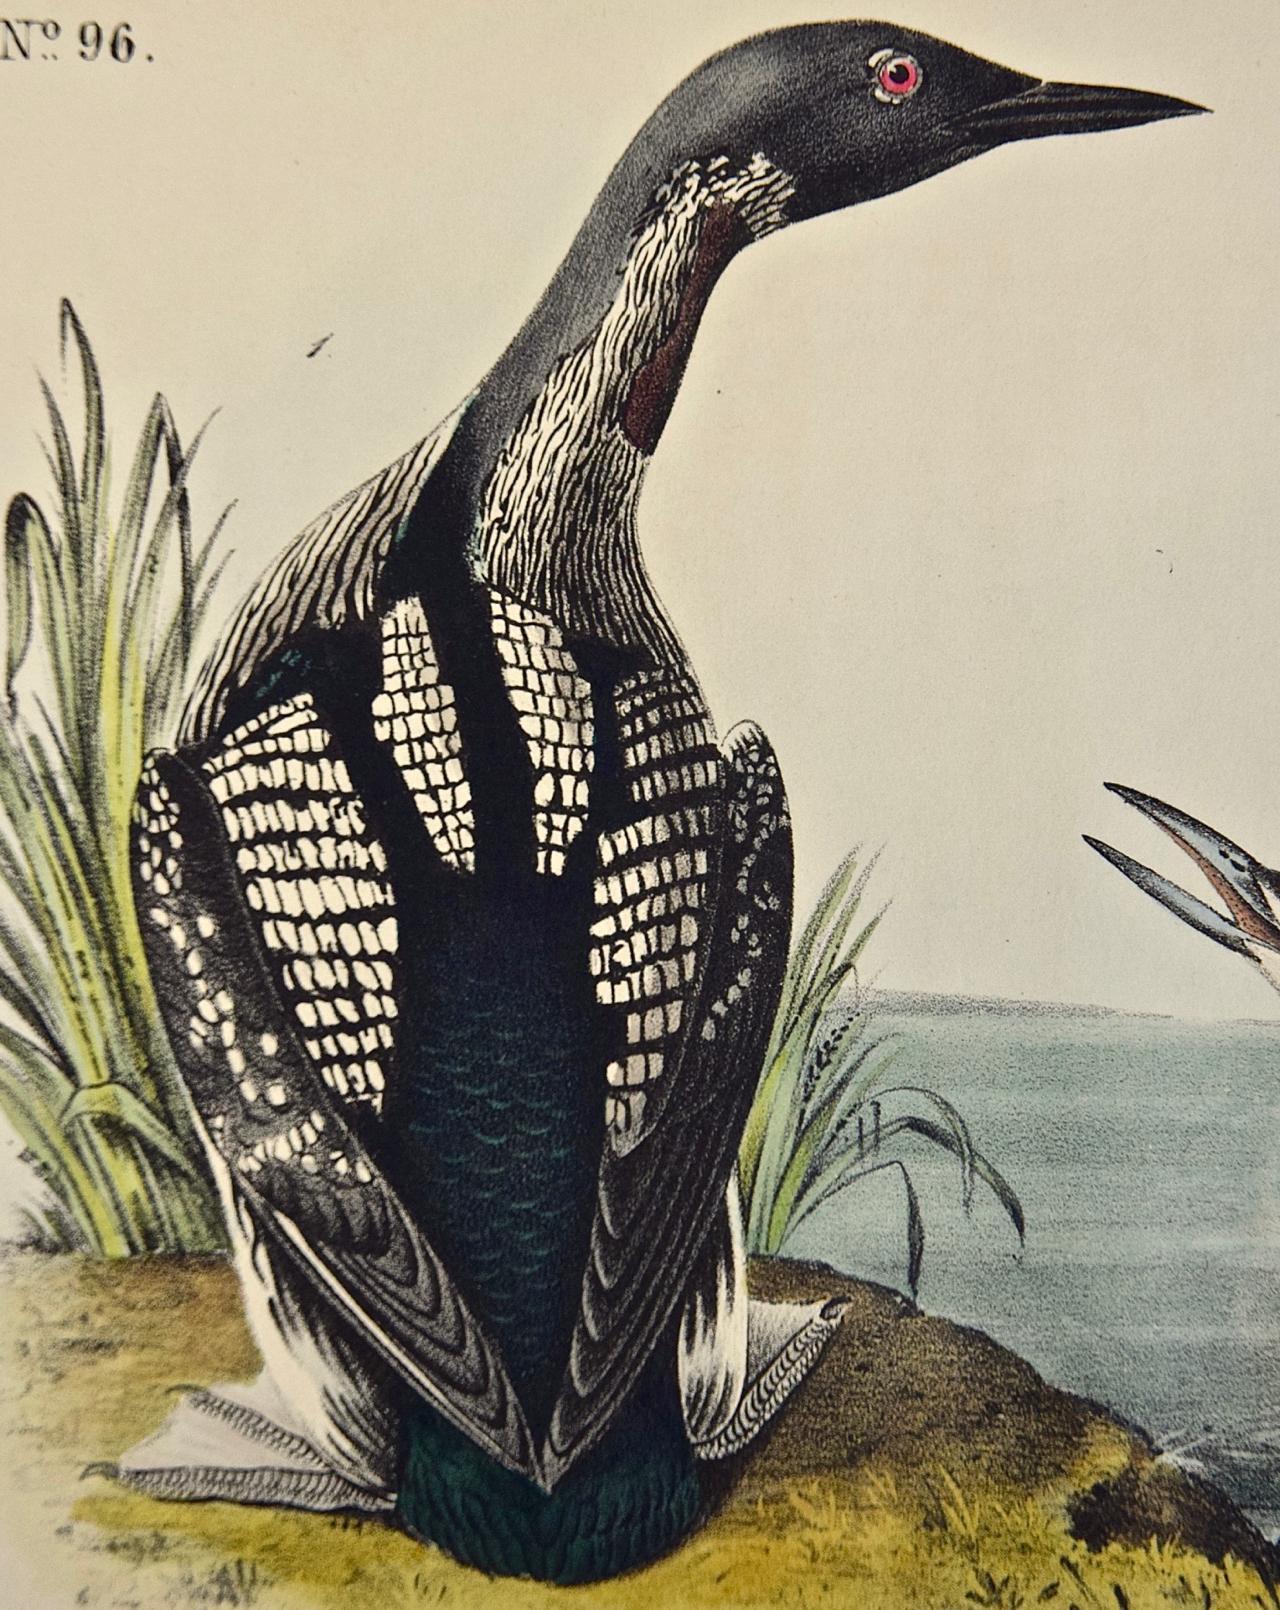 Black-throated Diver: Handkolorierte Audubon-Vogellithographie, Original 1. Auflage (Naturalismus), Print, von John James Audubon